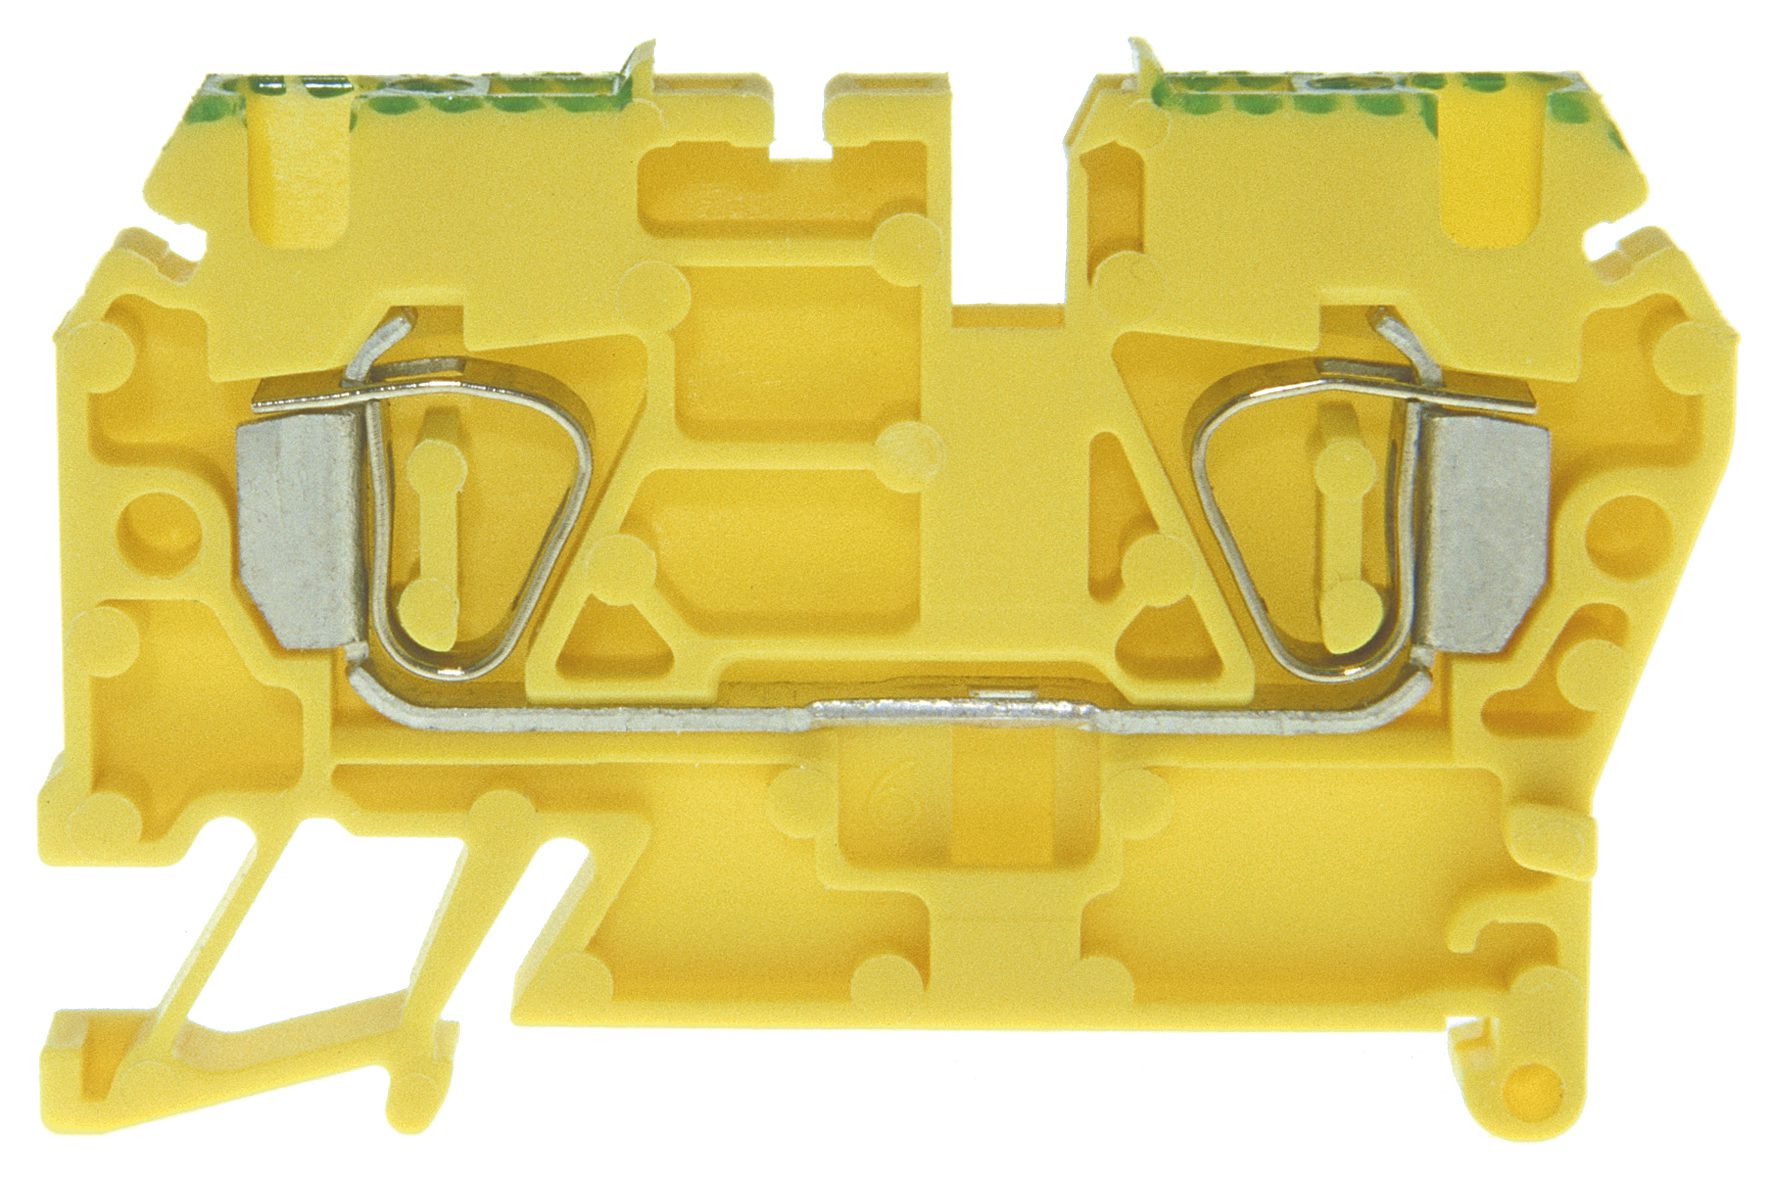 Spenningsklemme DIN35 2,5 mm² grønn/gul